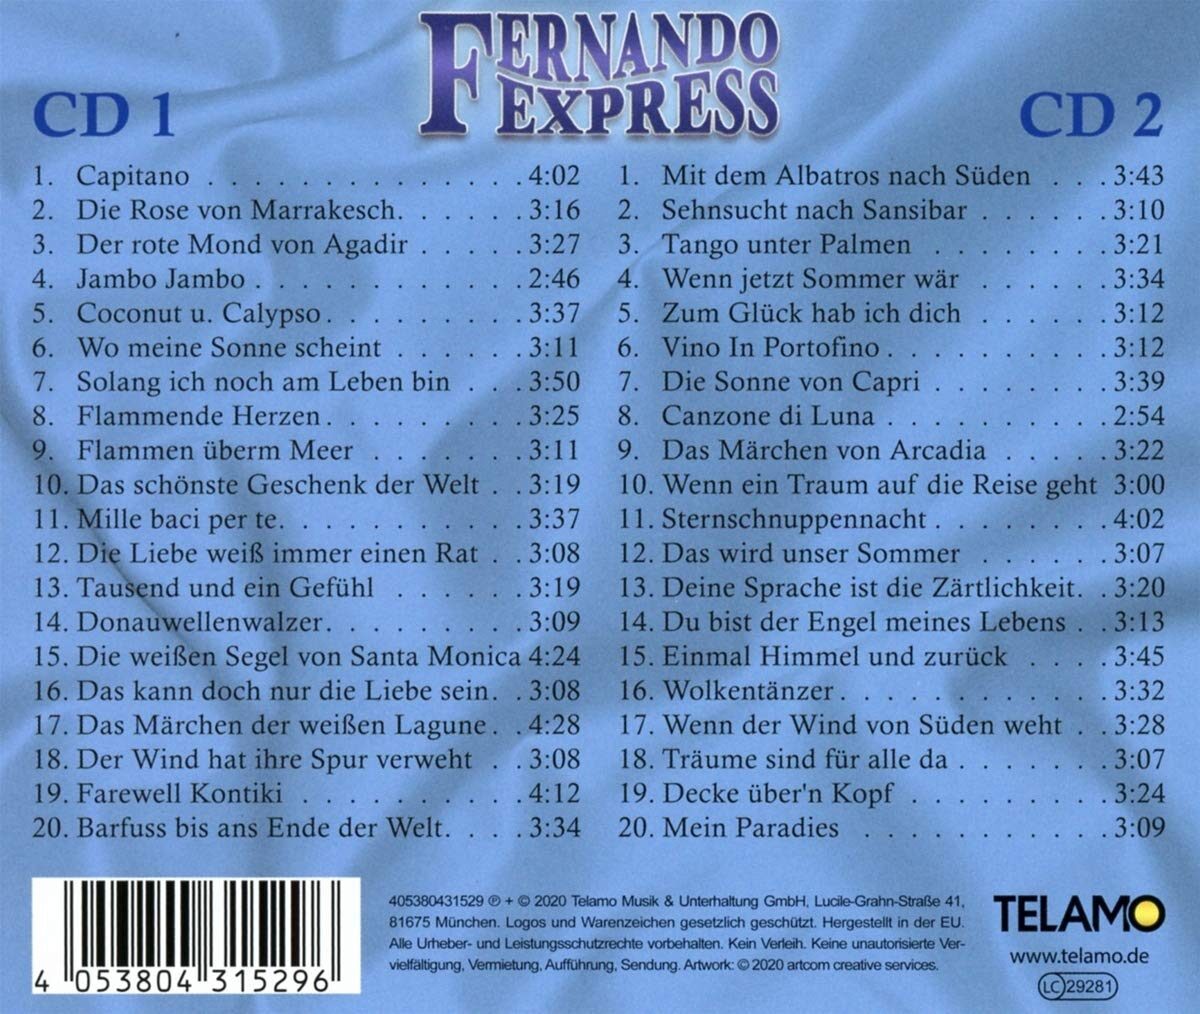 Fernando Express - Das Beste zum 50. Jubiläum (2020)